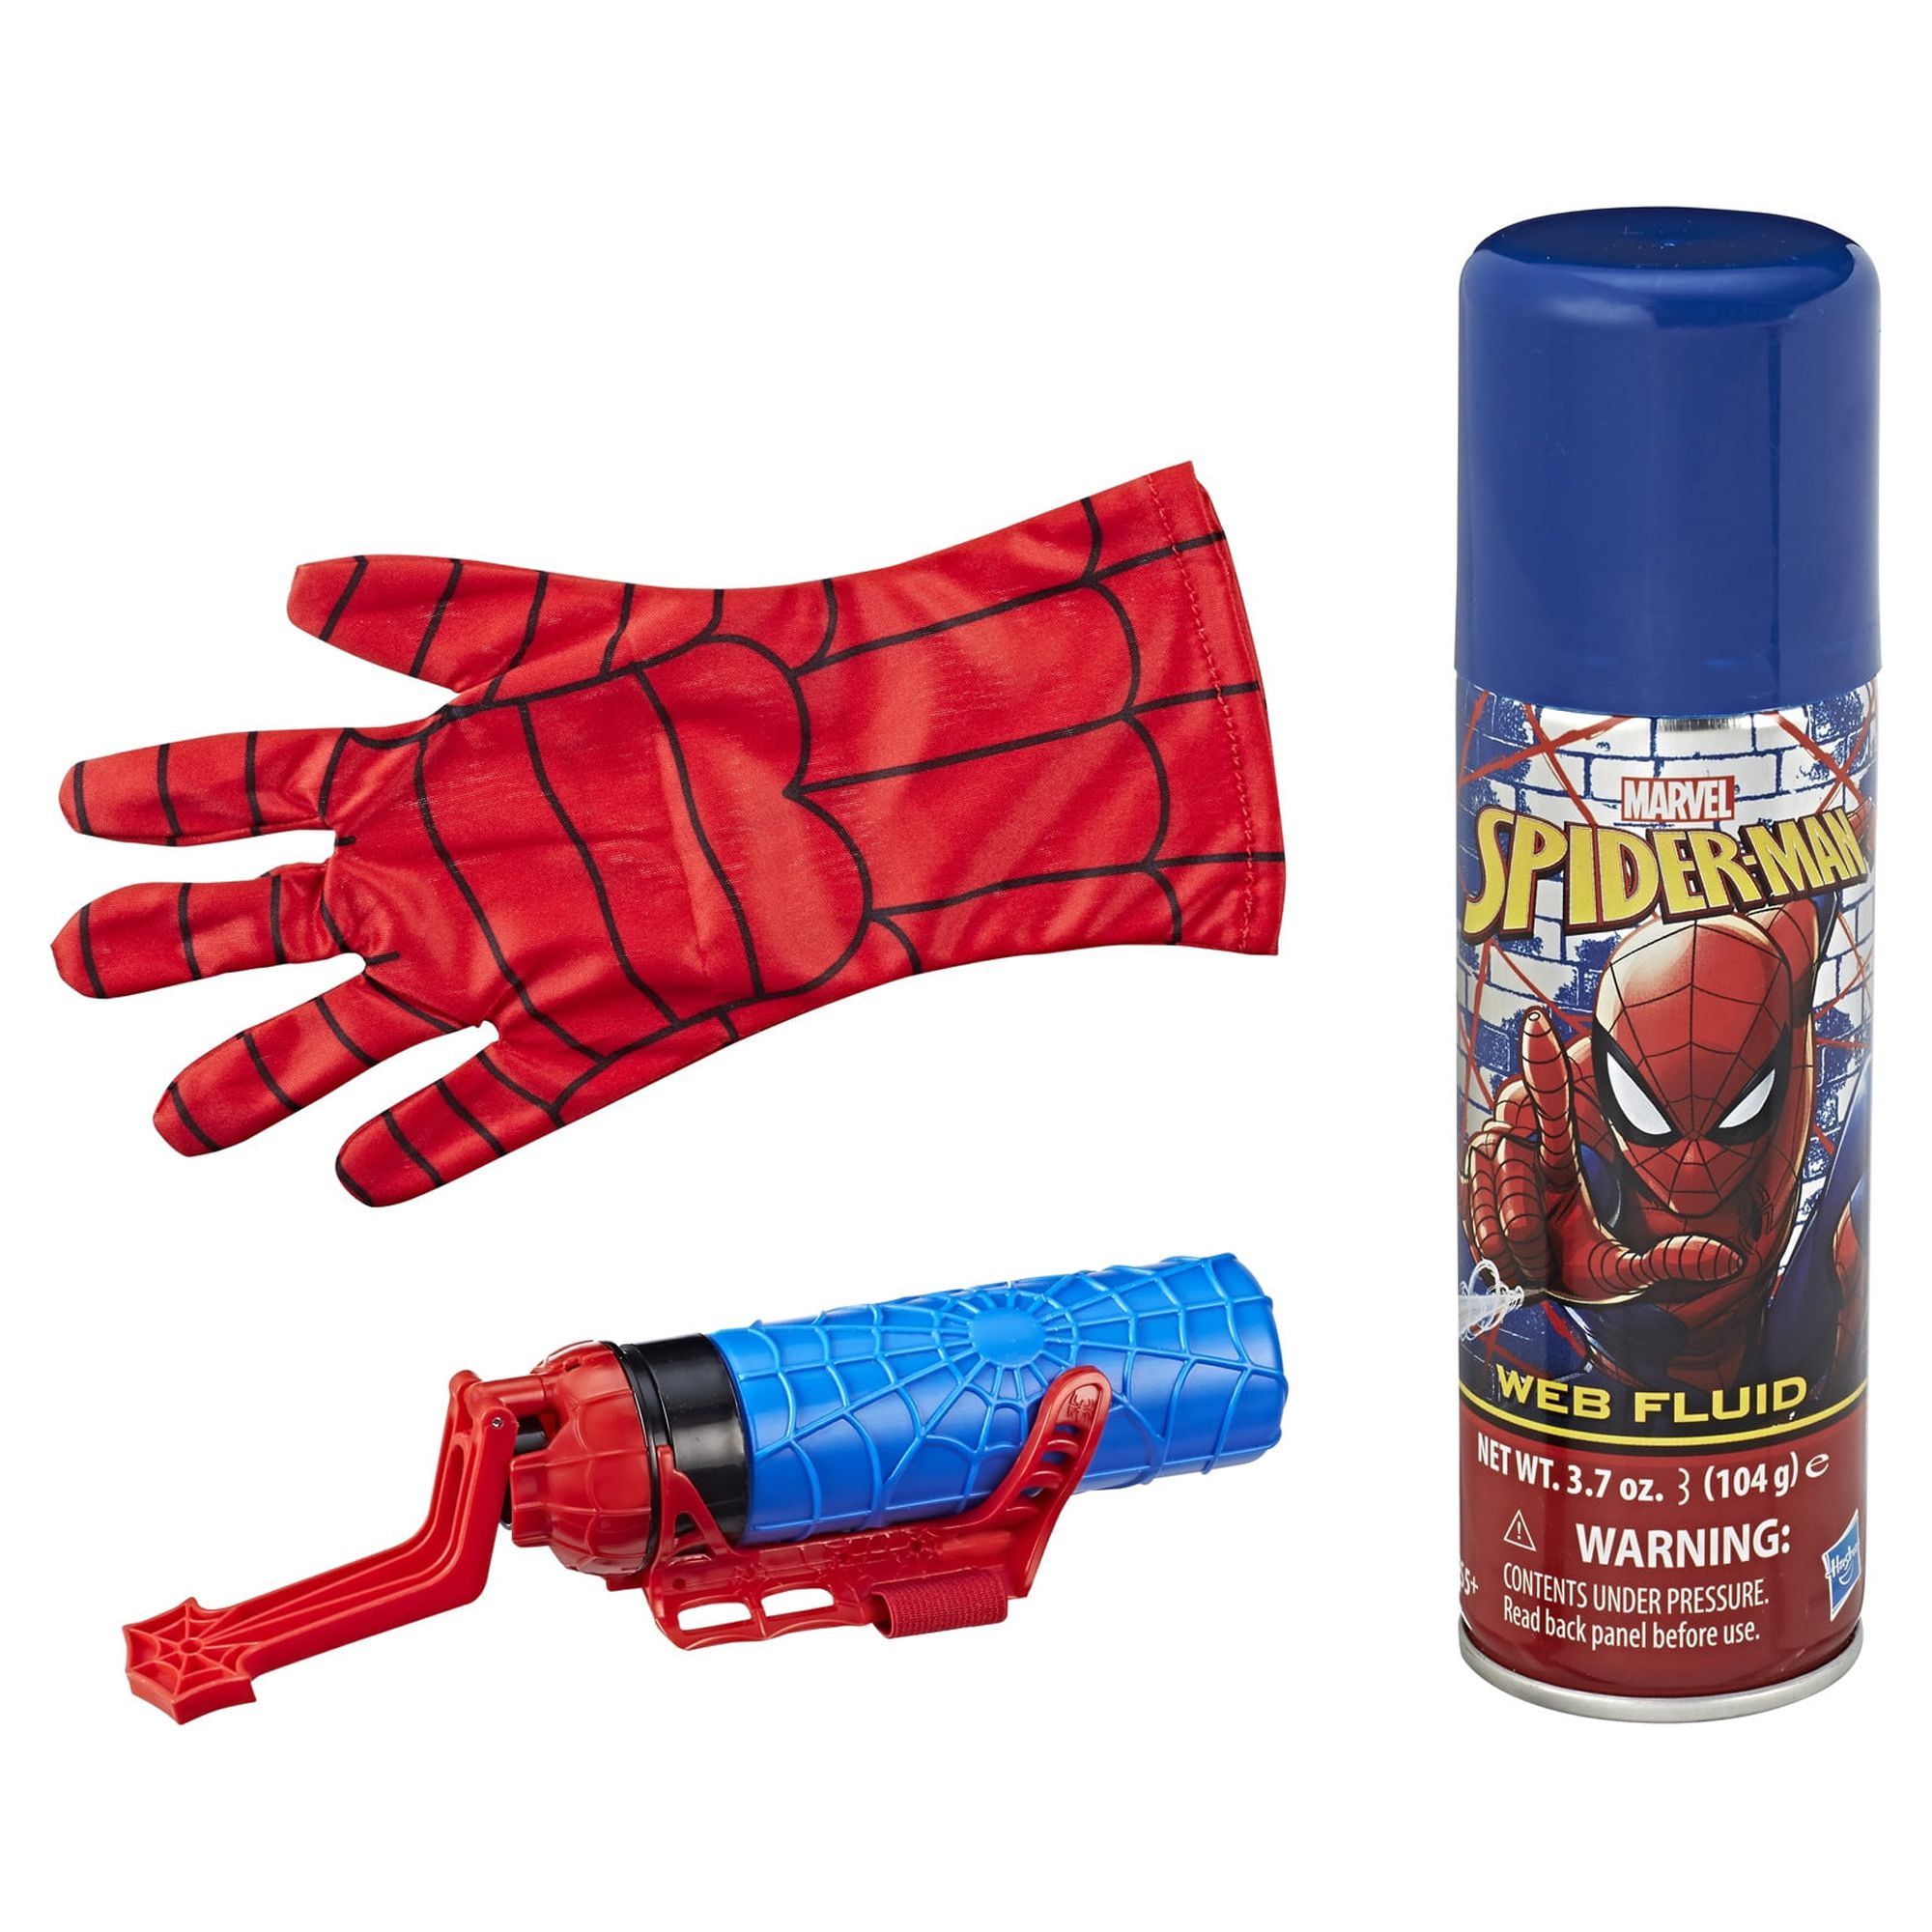 Spiderman web shooter - Gant Spiderman - Lanceur Spiderman